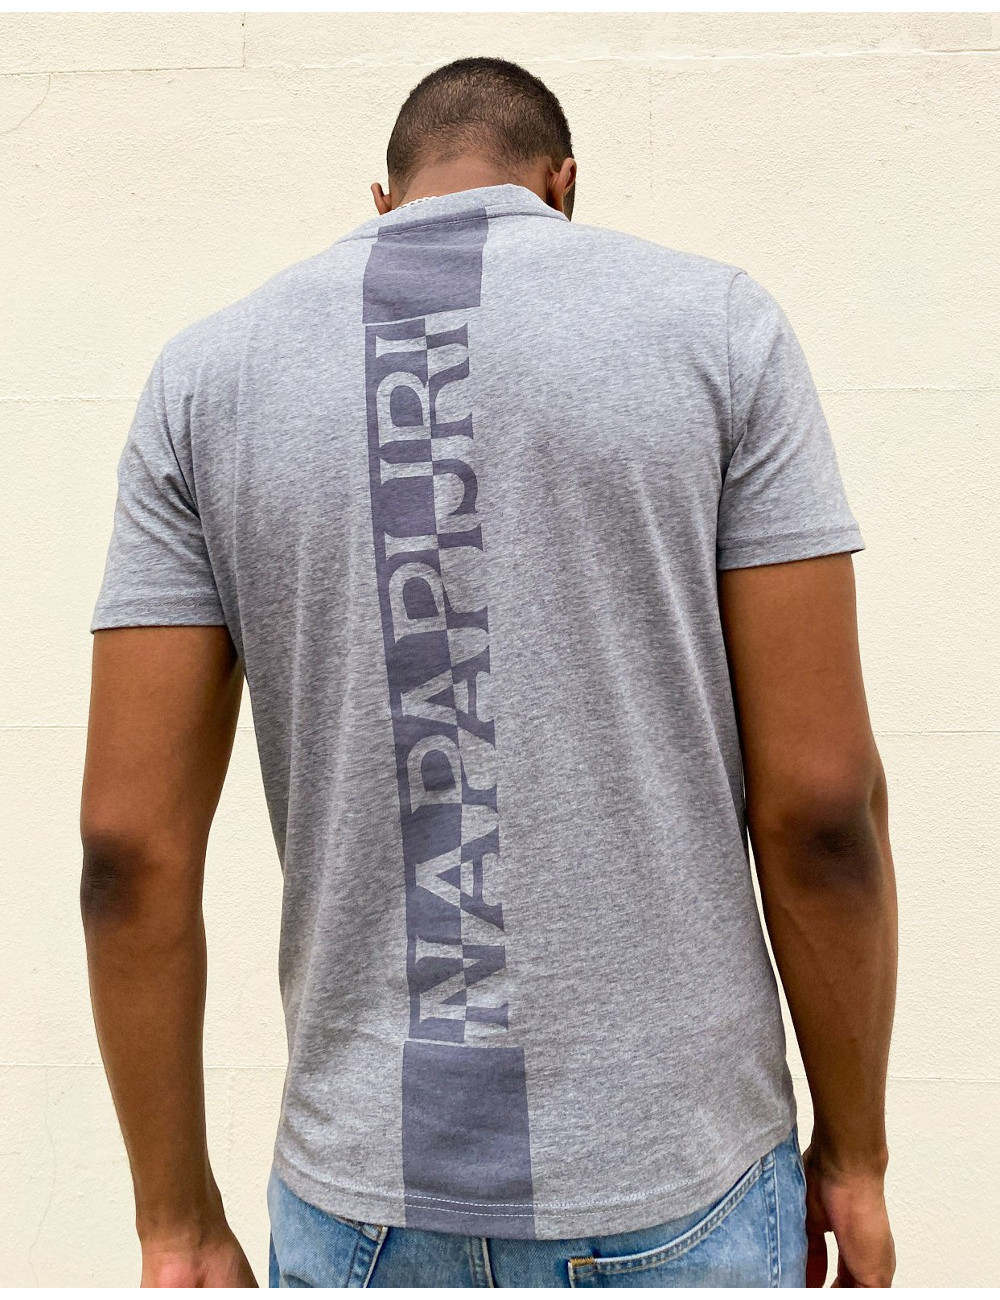 Napapijri Surf t-shirt in grey